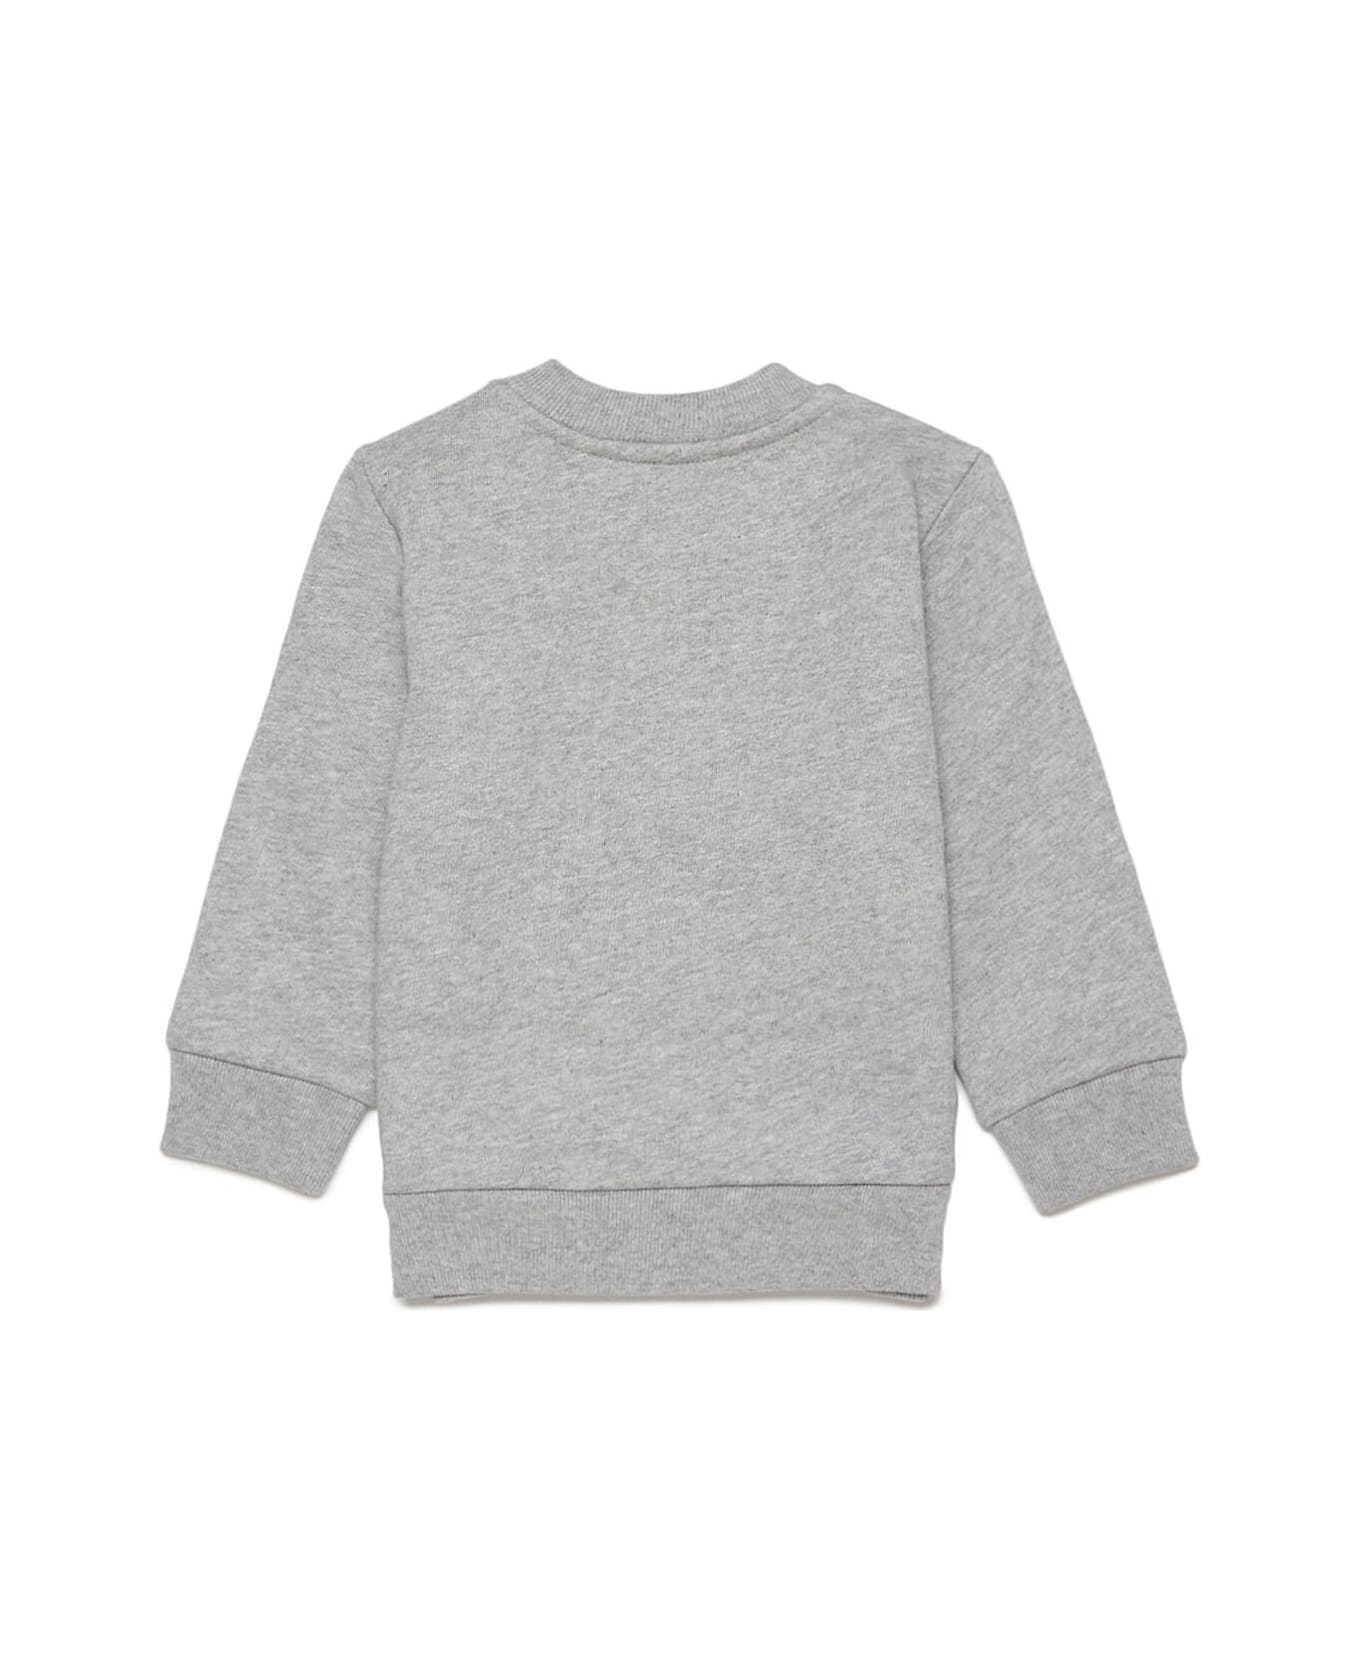 Marni Ms33b Sweat-shirt Marni Grey Cotton Sweatshirt With Marni Displaced Logo - Inox gray melange